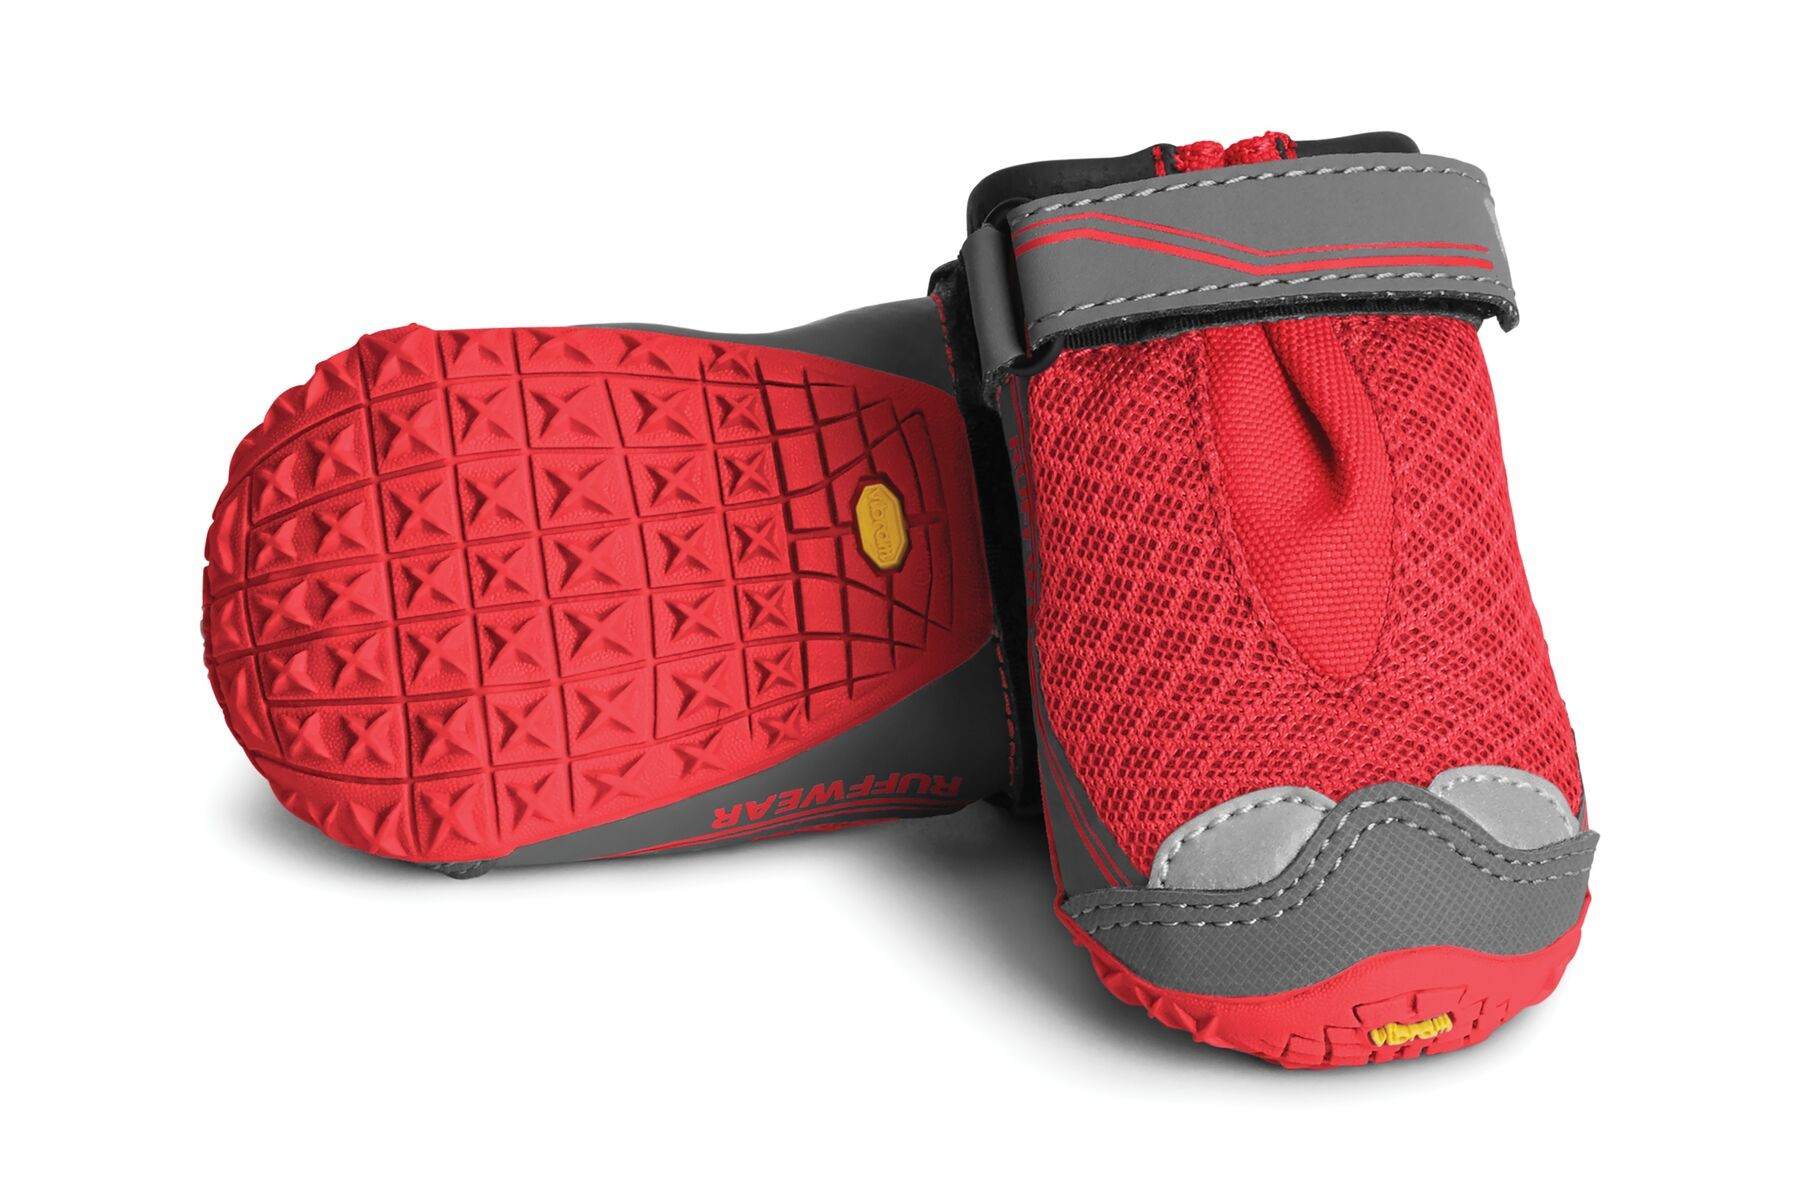 Paio di stivali rossi Grip Trex di Ruffwear - varie misure disponibili